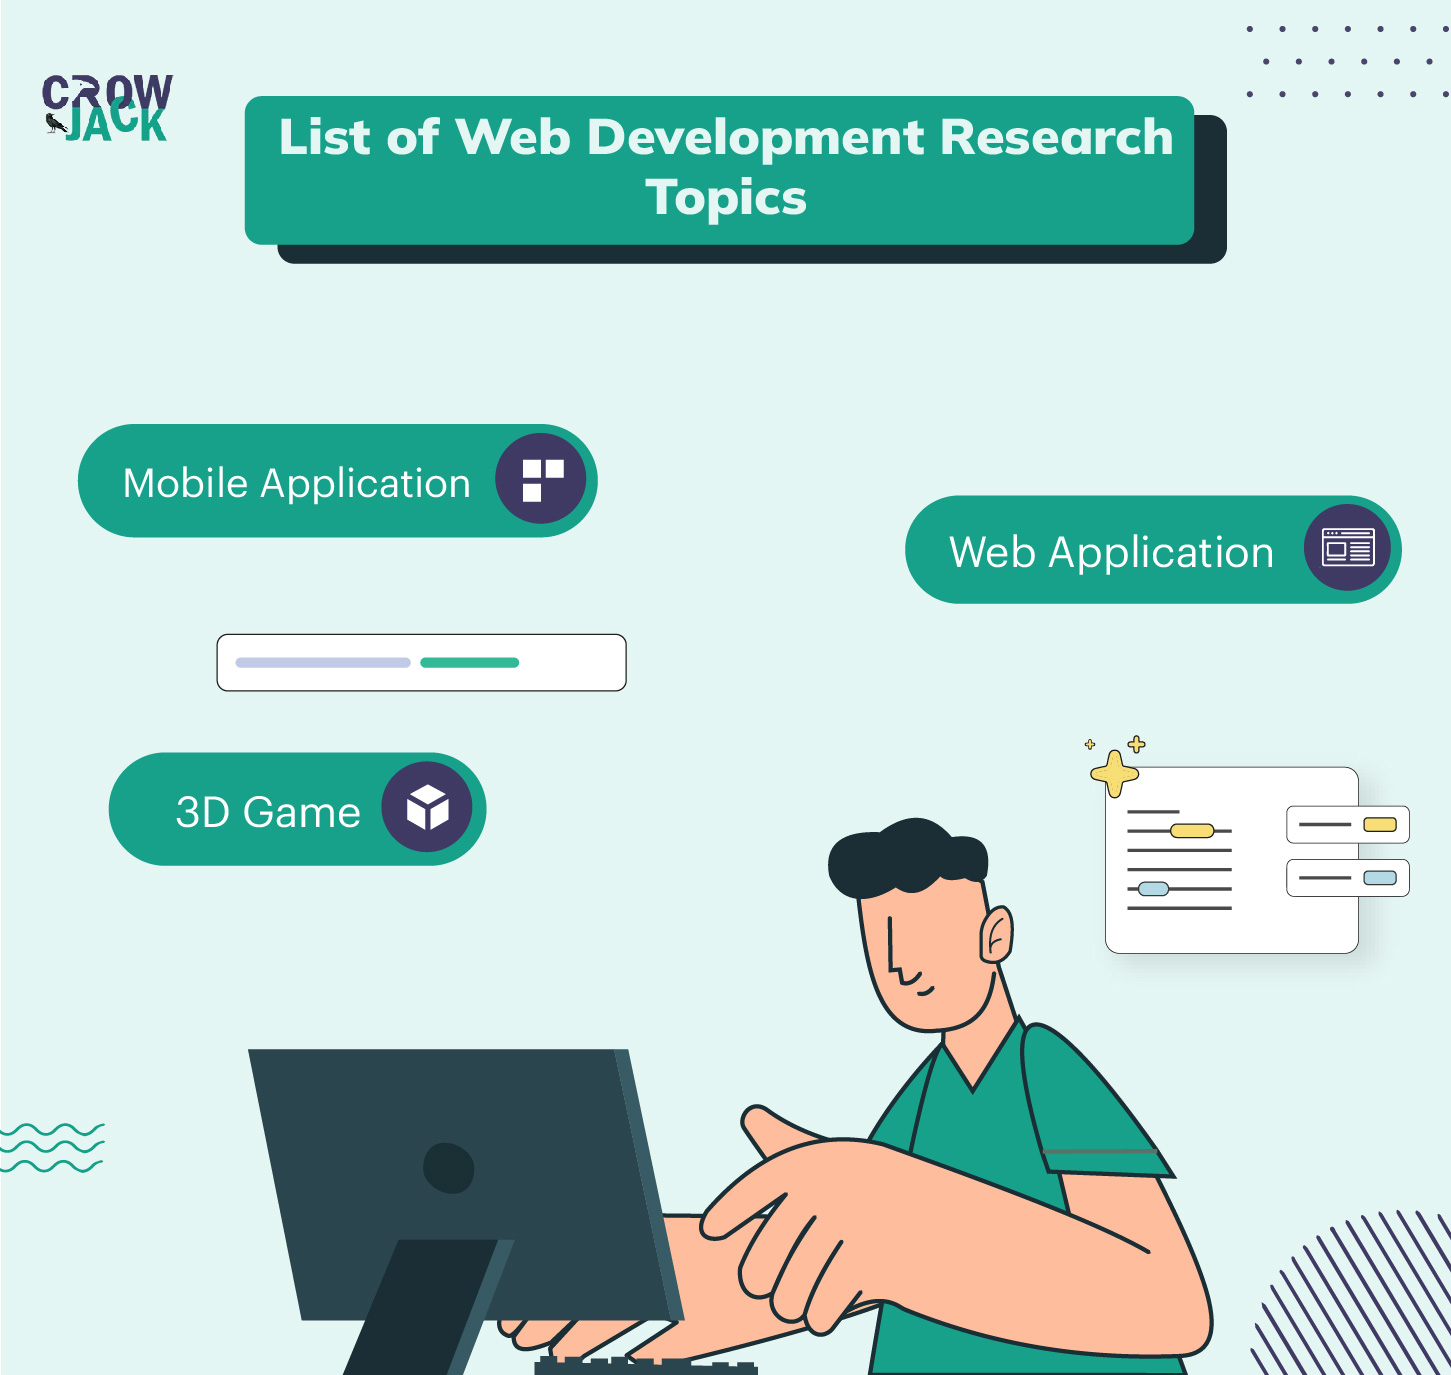 List of Web Development Research Topics